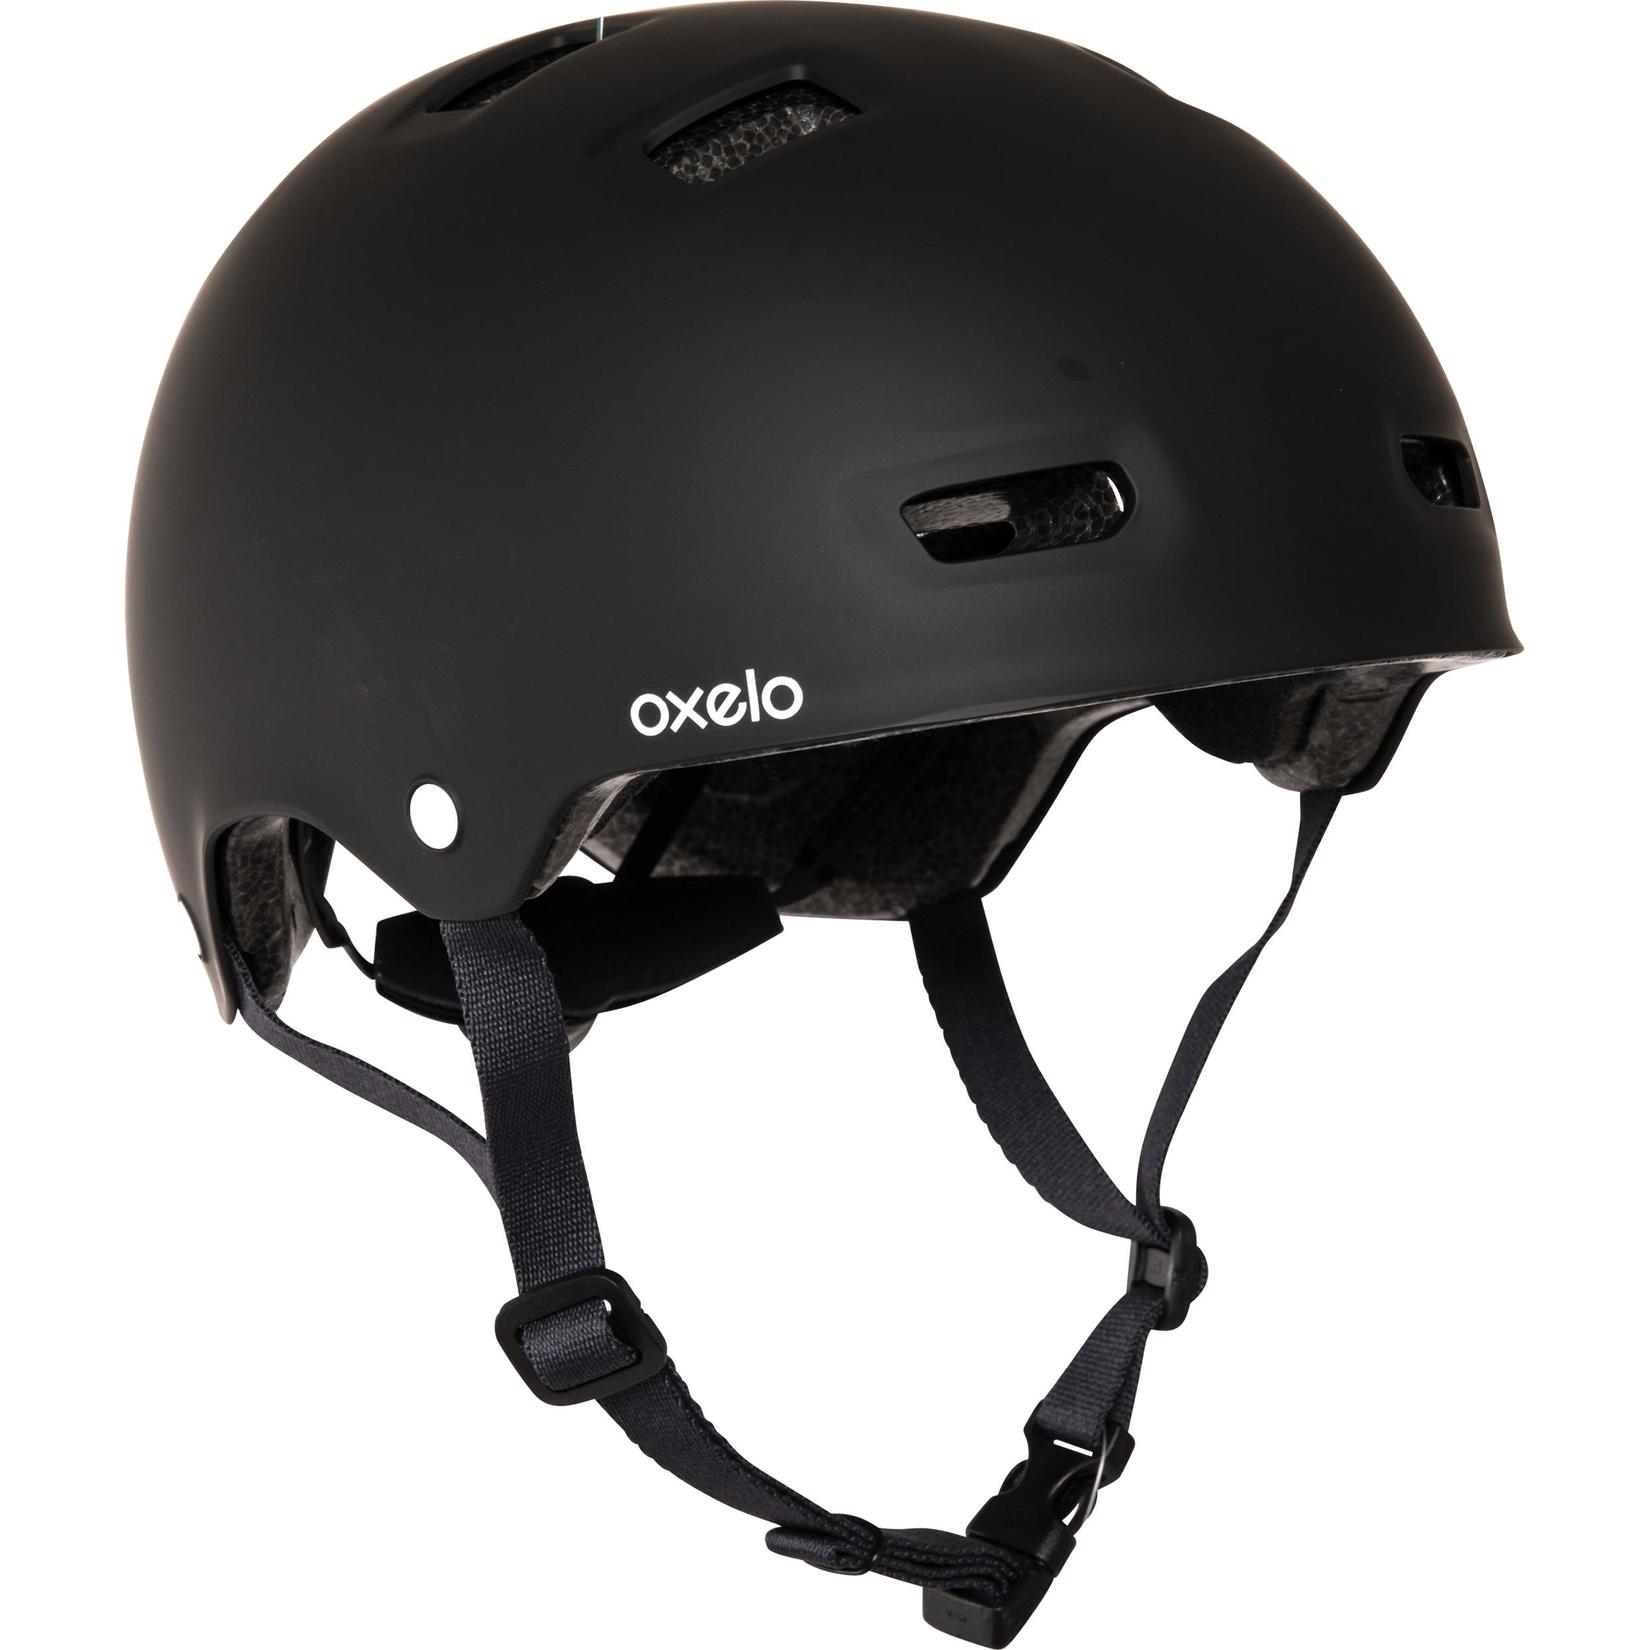 Adjustable Skate Helmet - MF 500 Black offers at $36 in Decathlon